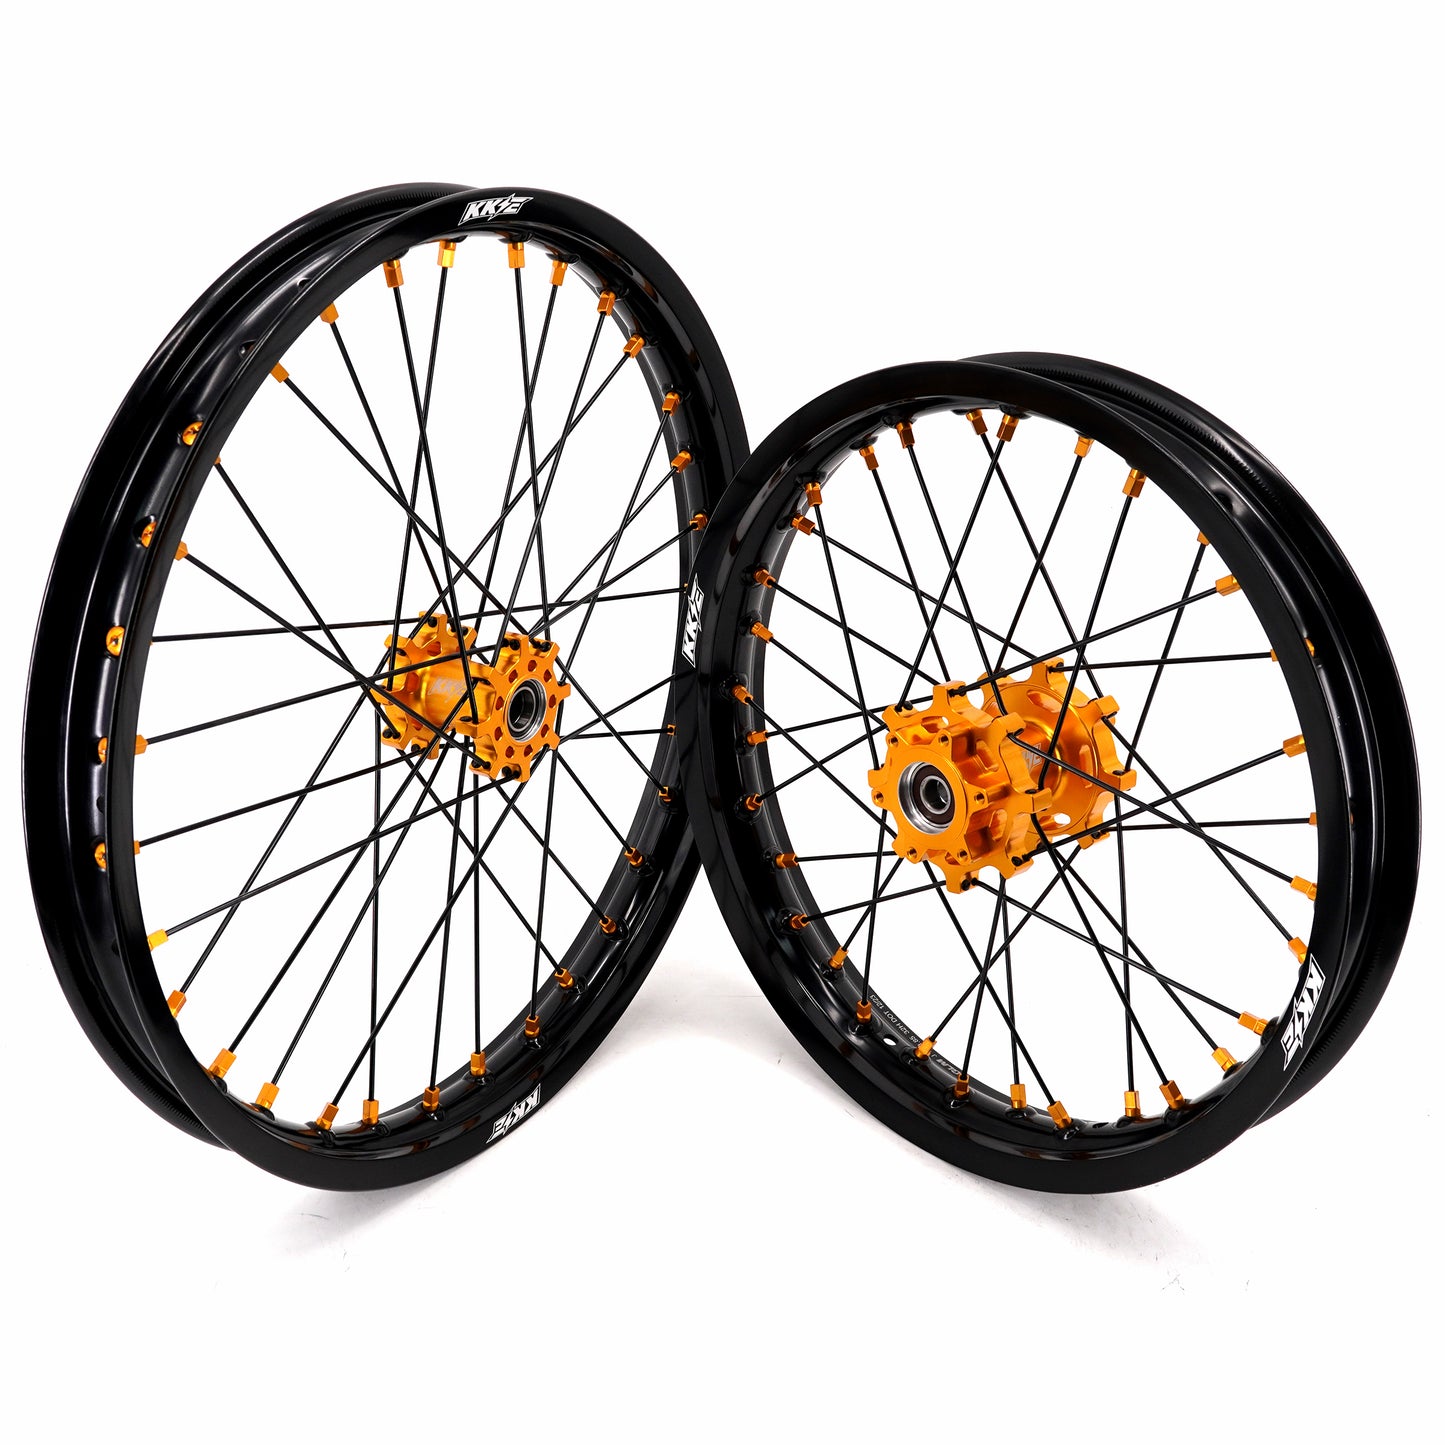 KKE 1.6*19" & 1.85*16" Rims Fit Talaria Sting MX3 /R MX4 E-bike Wheels Gold